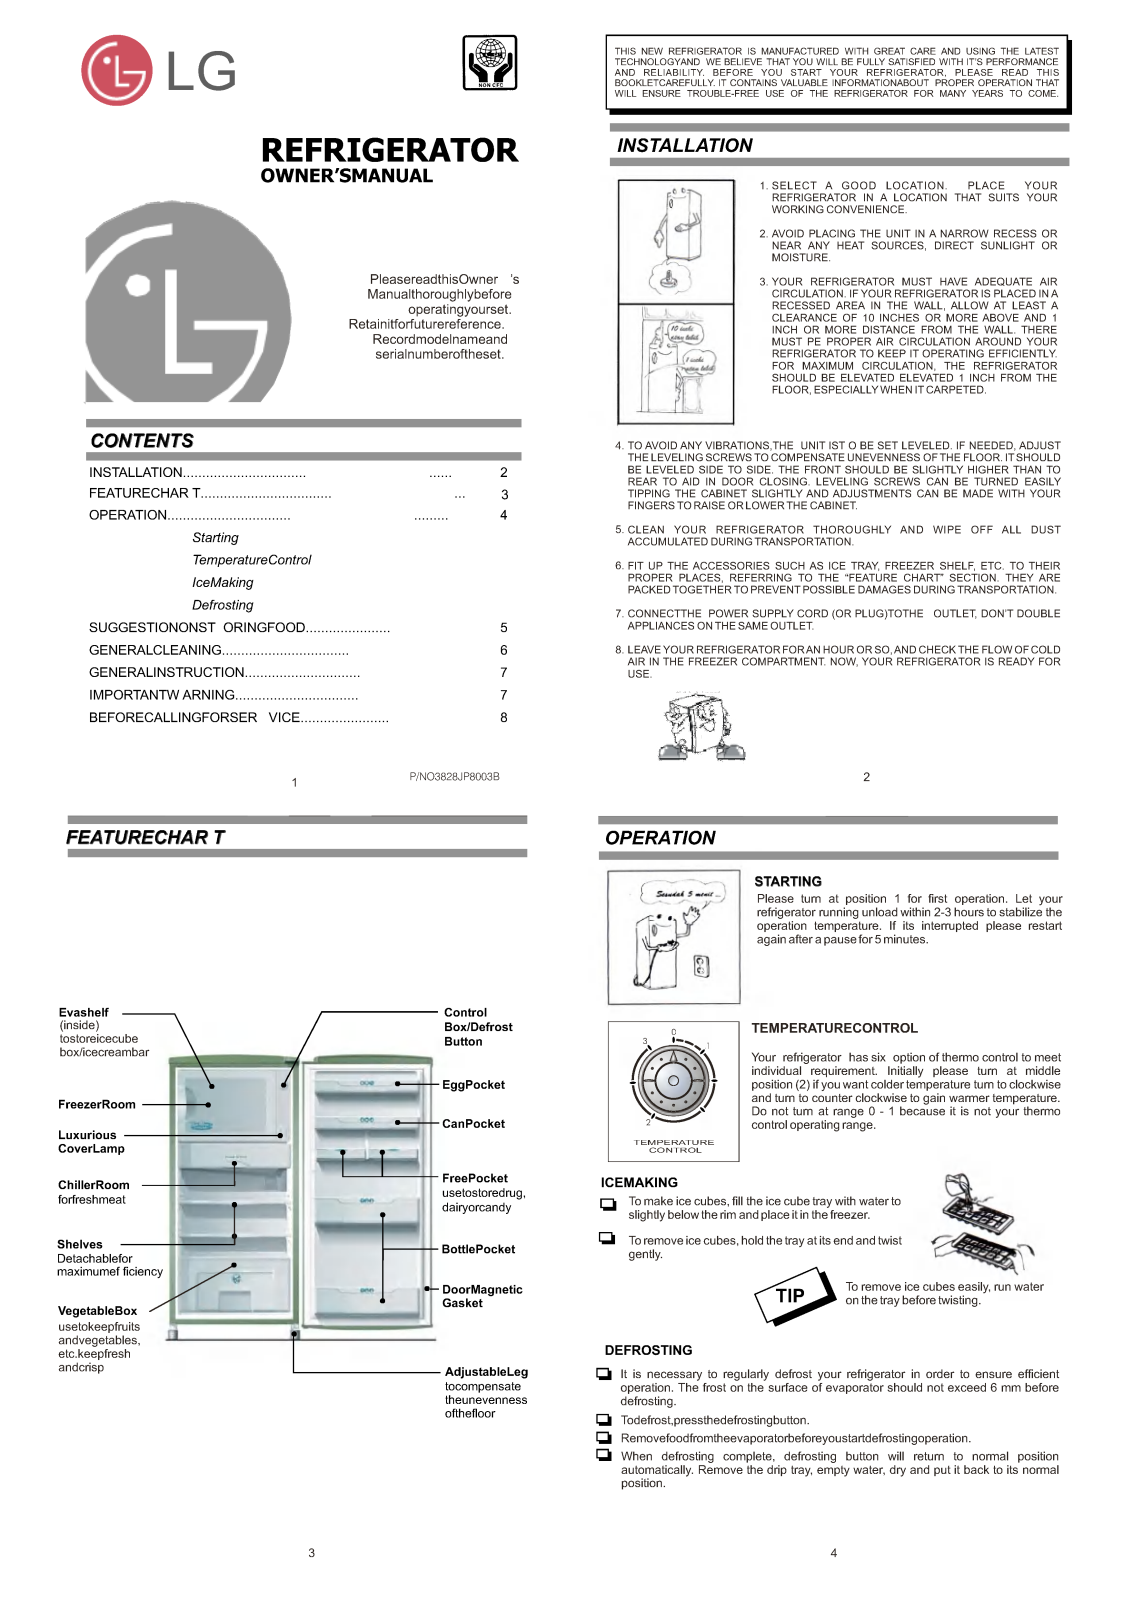 LG GR-191TVK Manual book